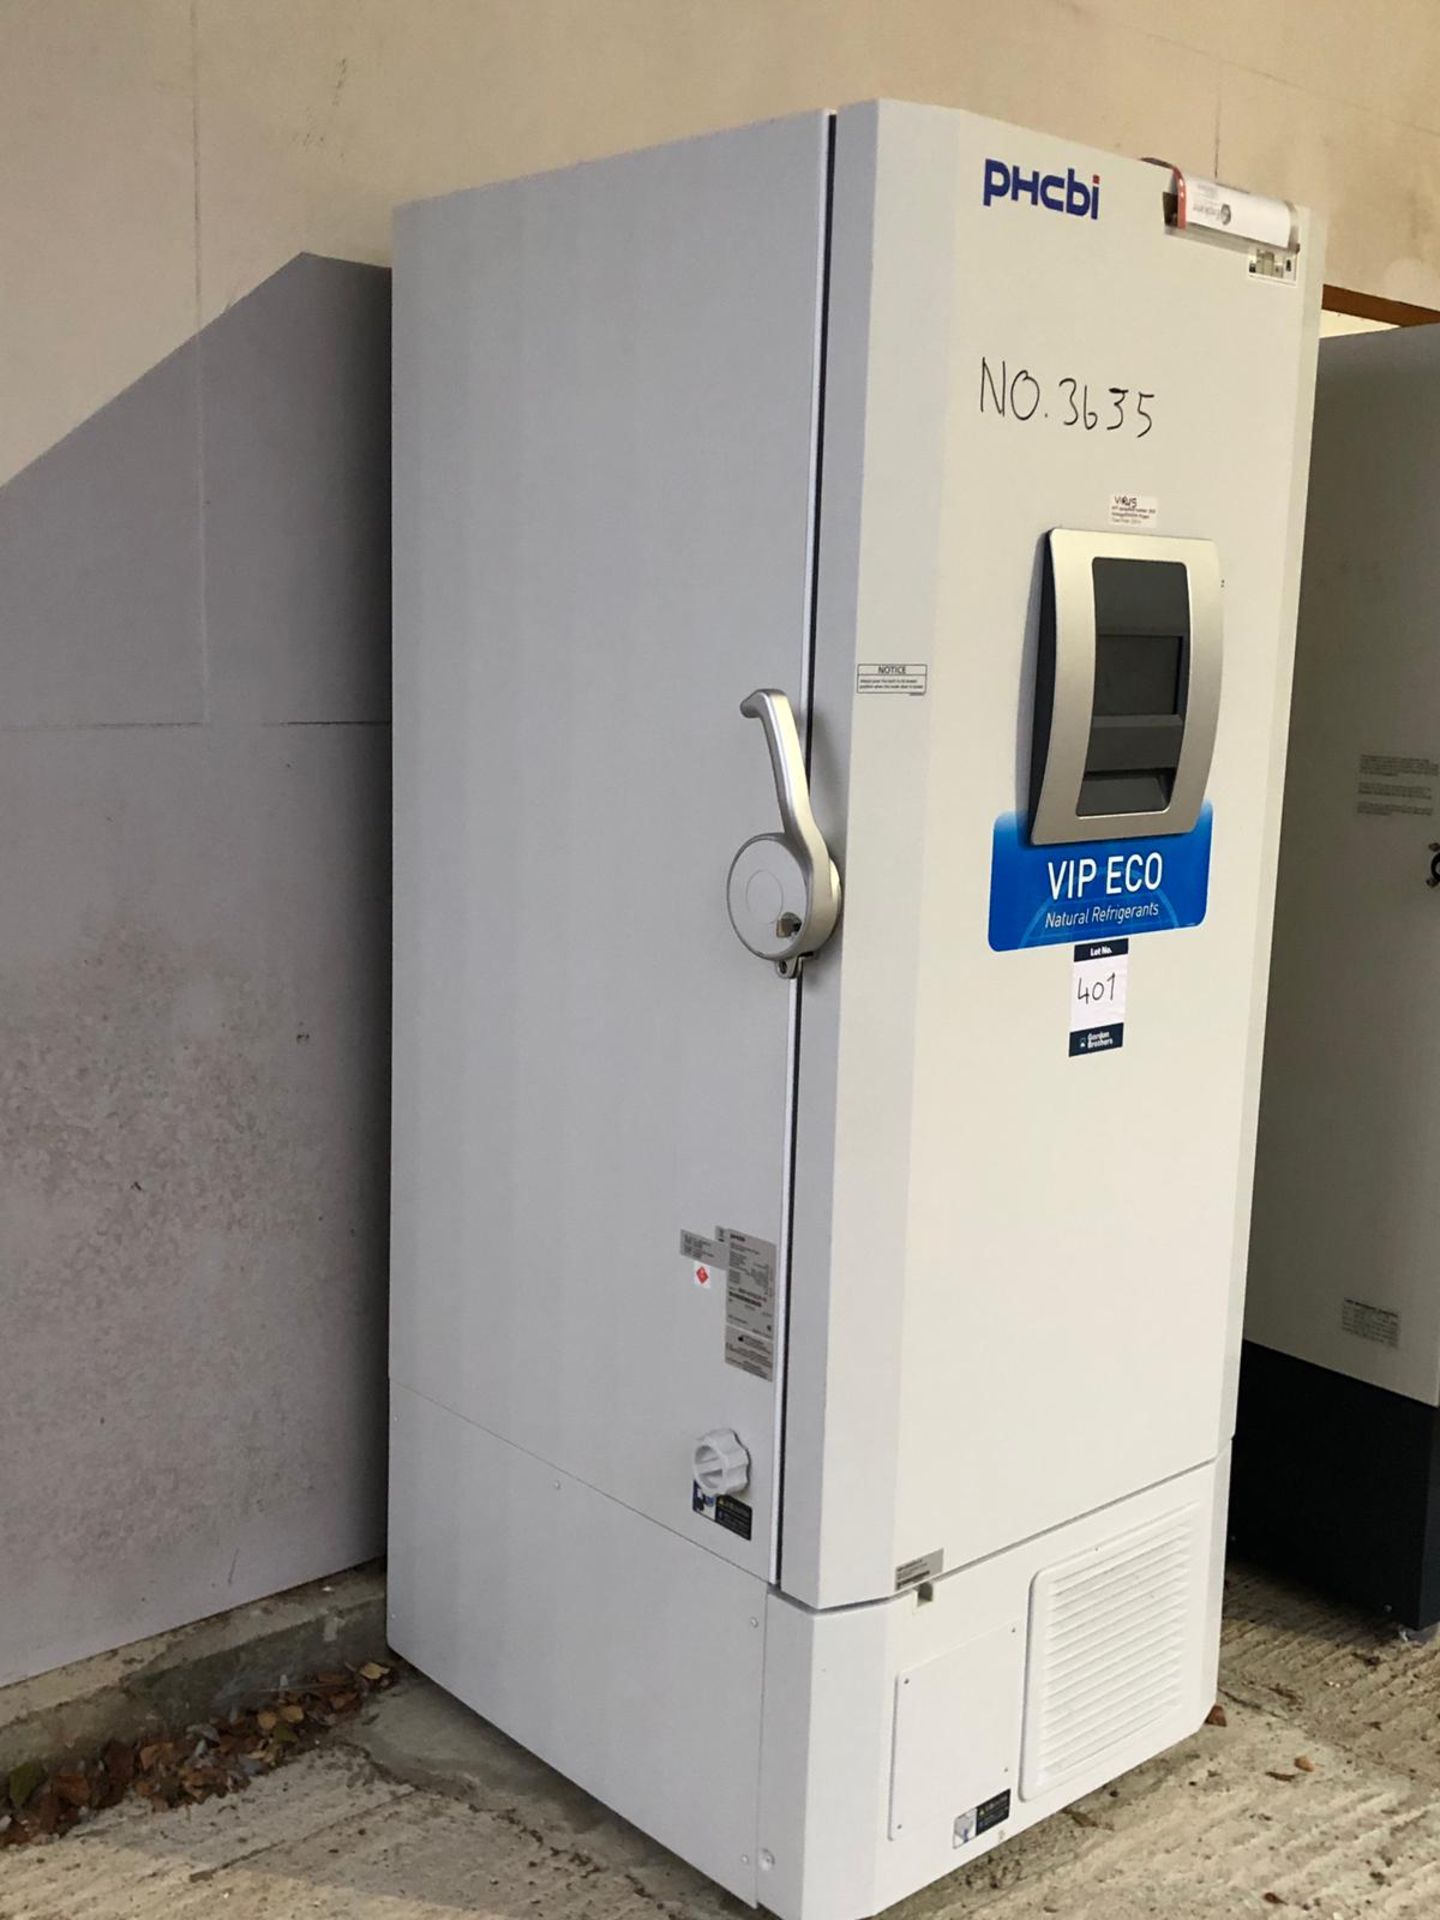 PHCBI MDF-DU502VH-PE Ultra Low temperature freezer, 528l capacity, Serial No. 19070291 (2019) with - Image 2 of 4